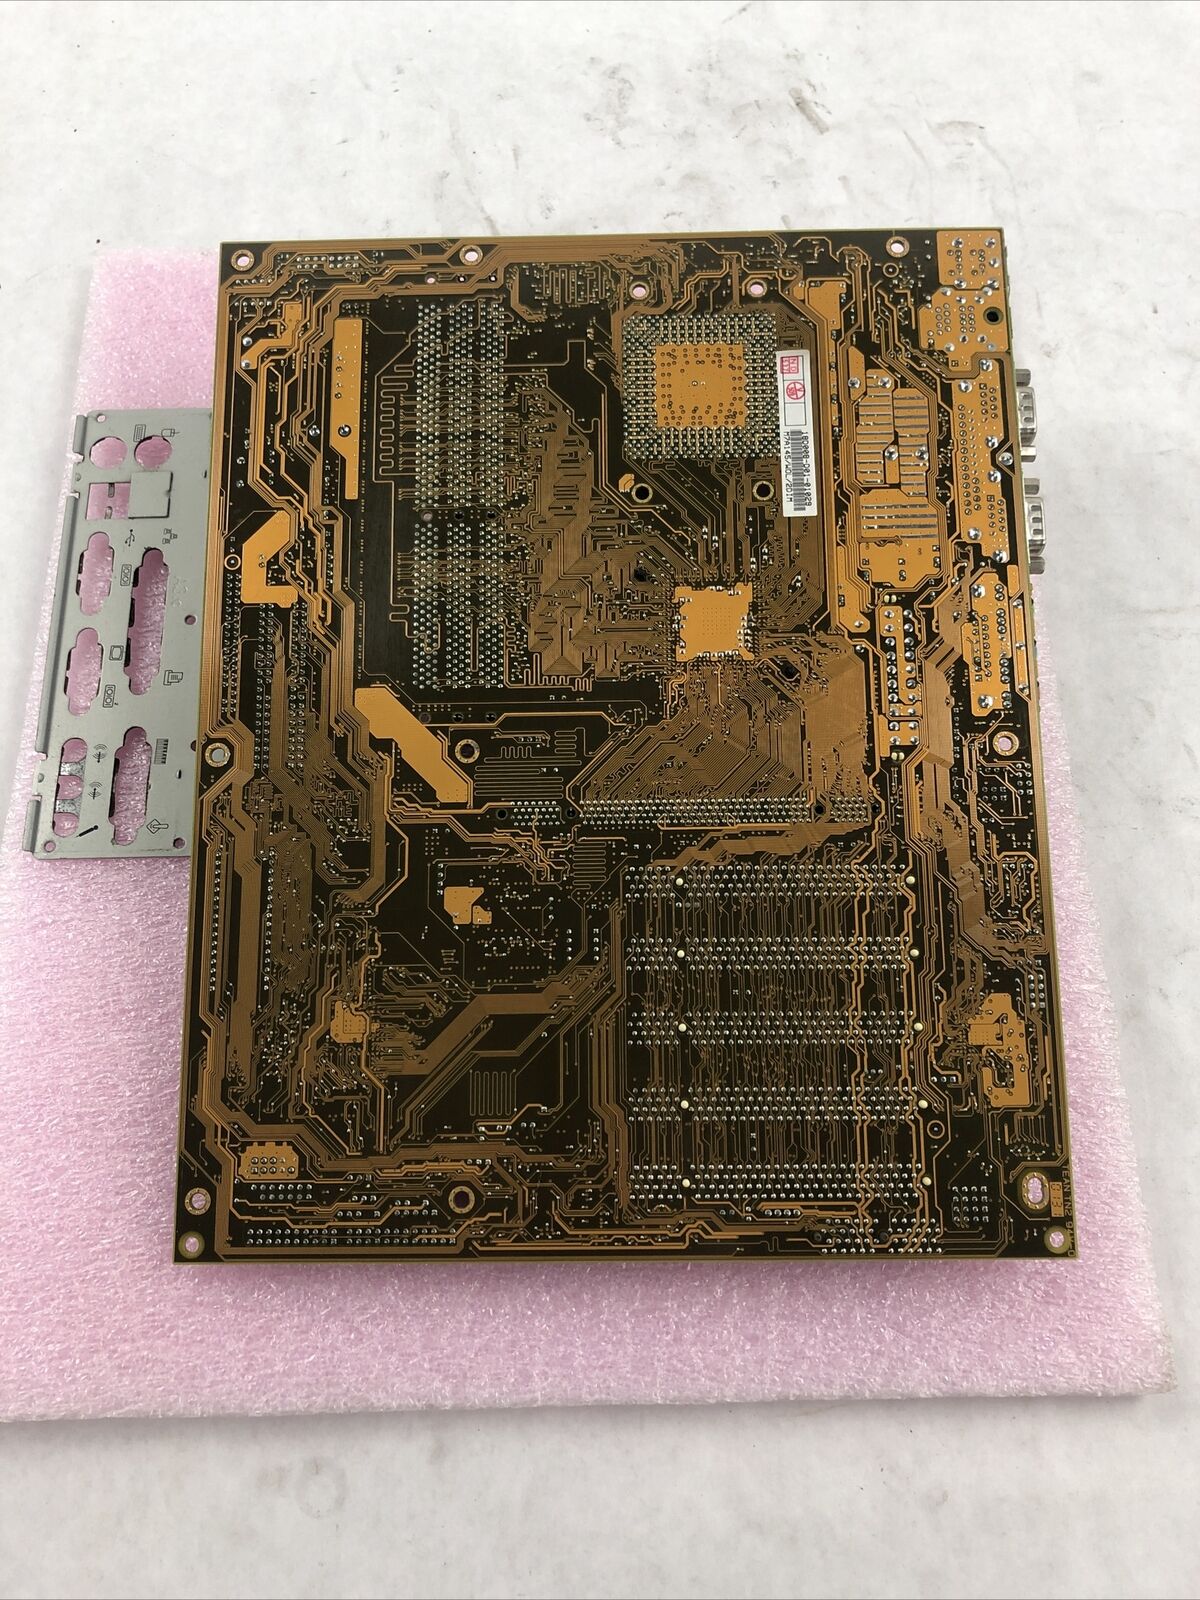 ASUS A7M266 Motherboard AMD Athlon 900MHz 256MB RAM w/ I/O Shield